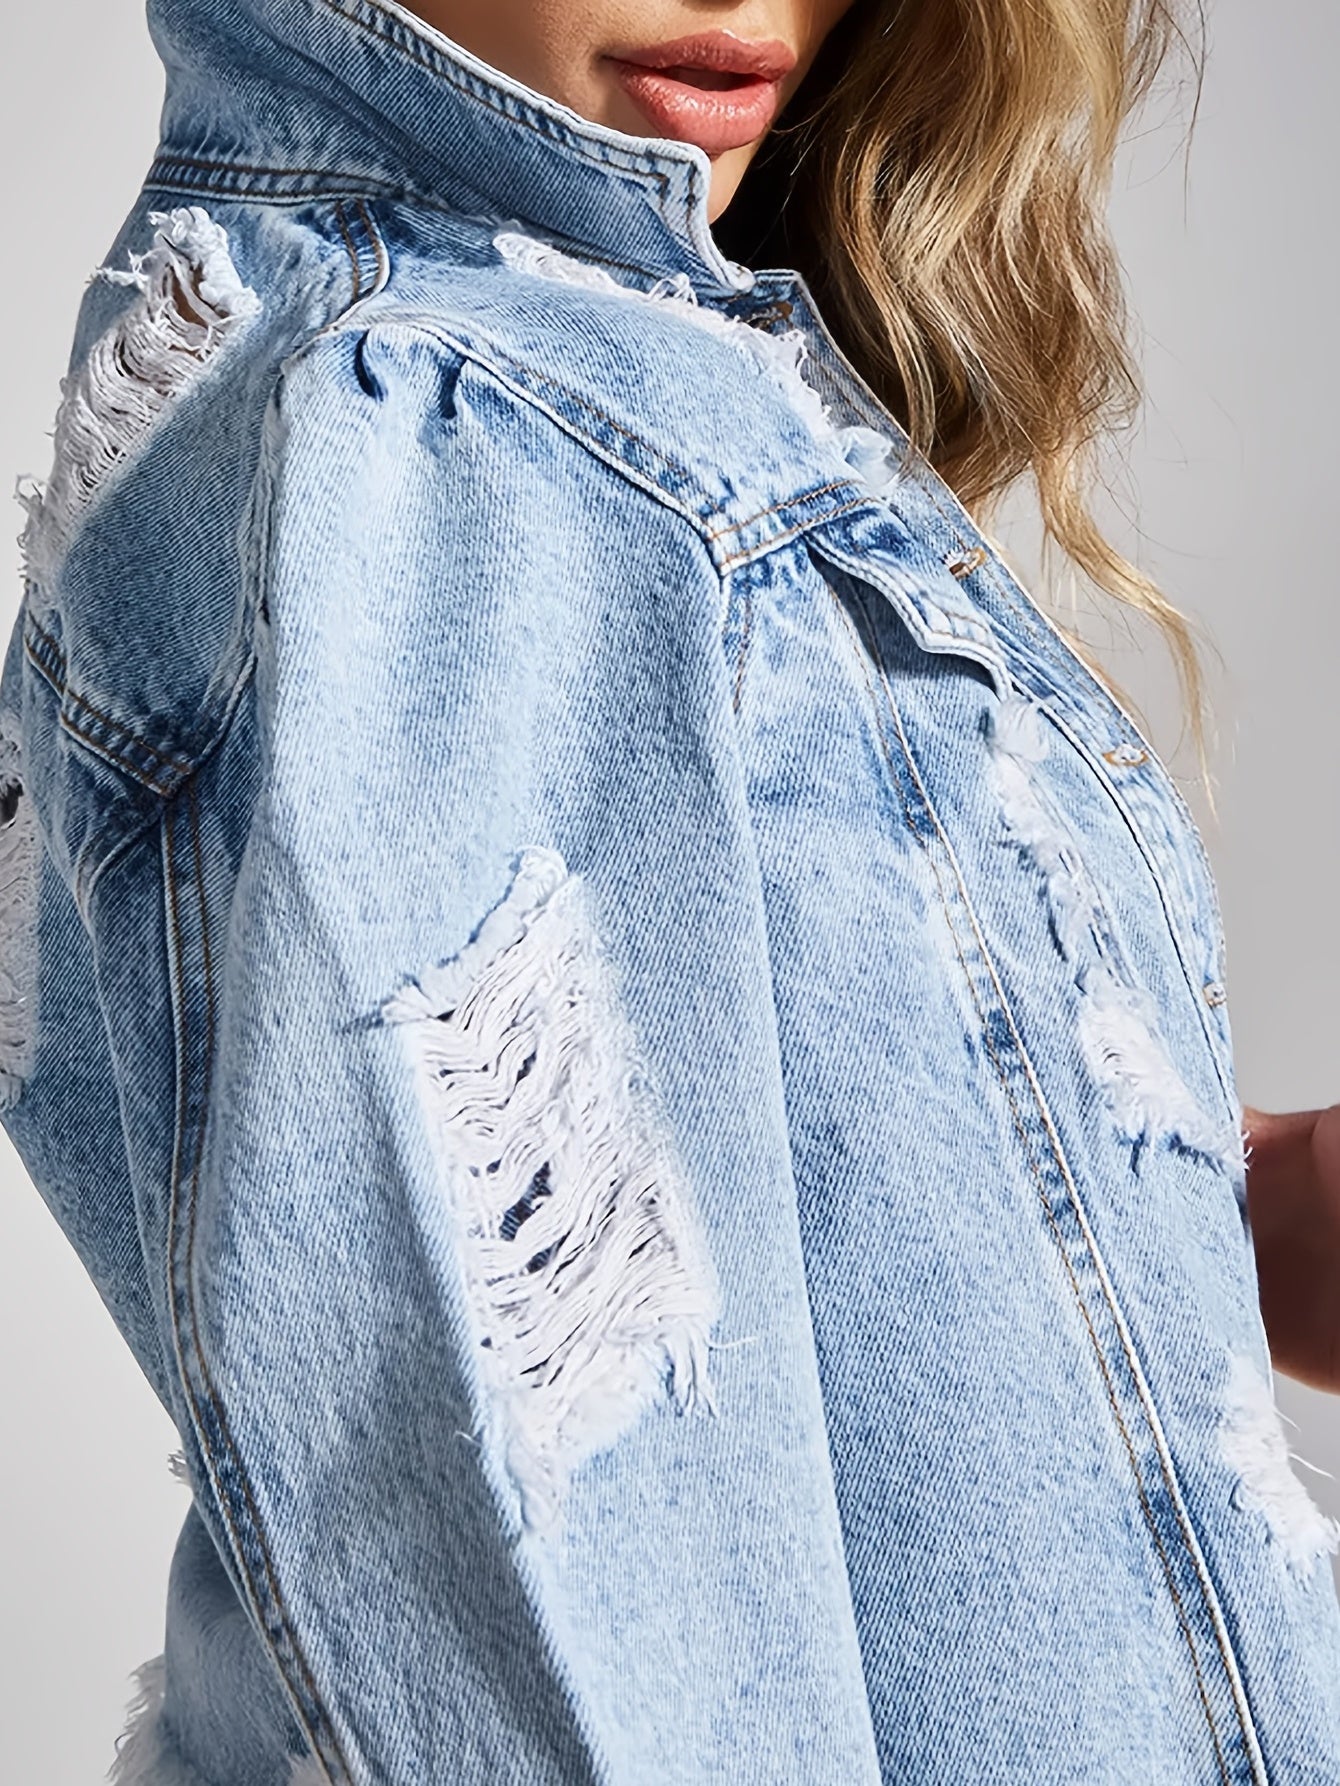 Lovevop-Long Sleeve Distressed Cropped Denim Jacket, Raw Hem Frayed Fabrics Flap Pocket Light Blue Denim Coats, Women's Denim Jackets & Clothing